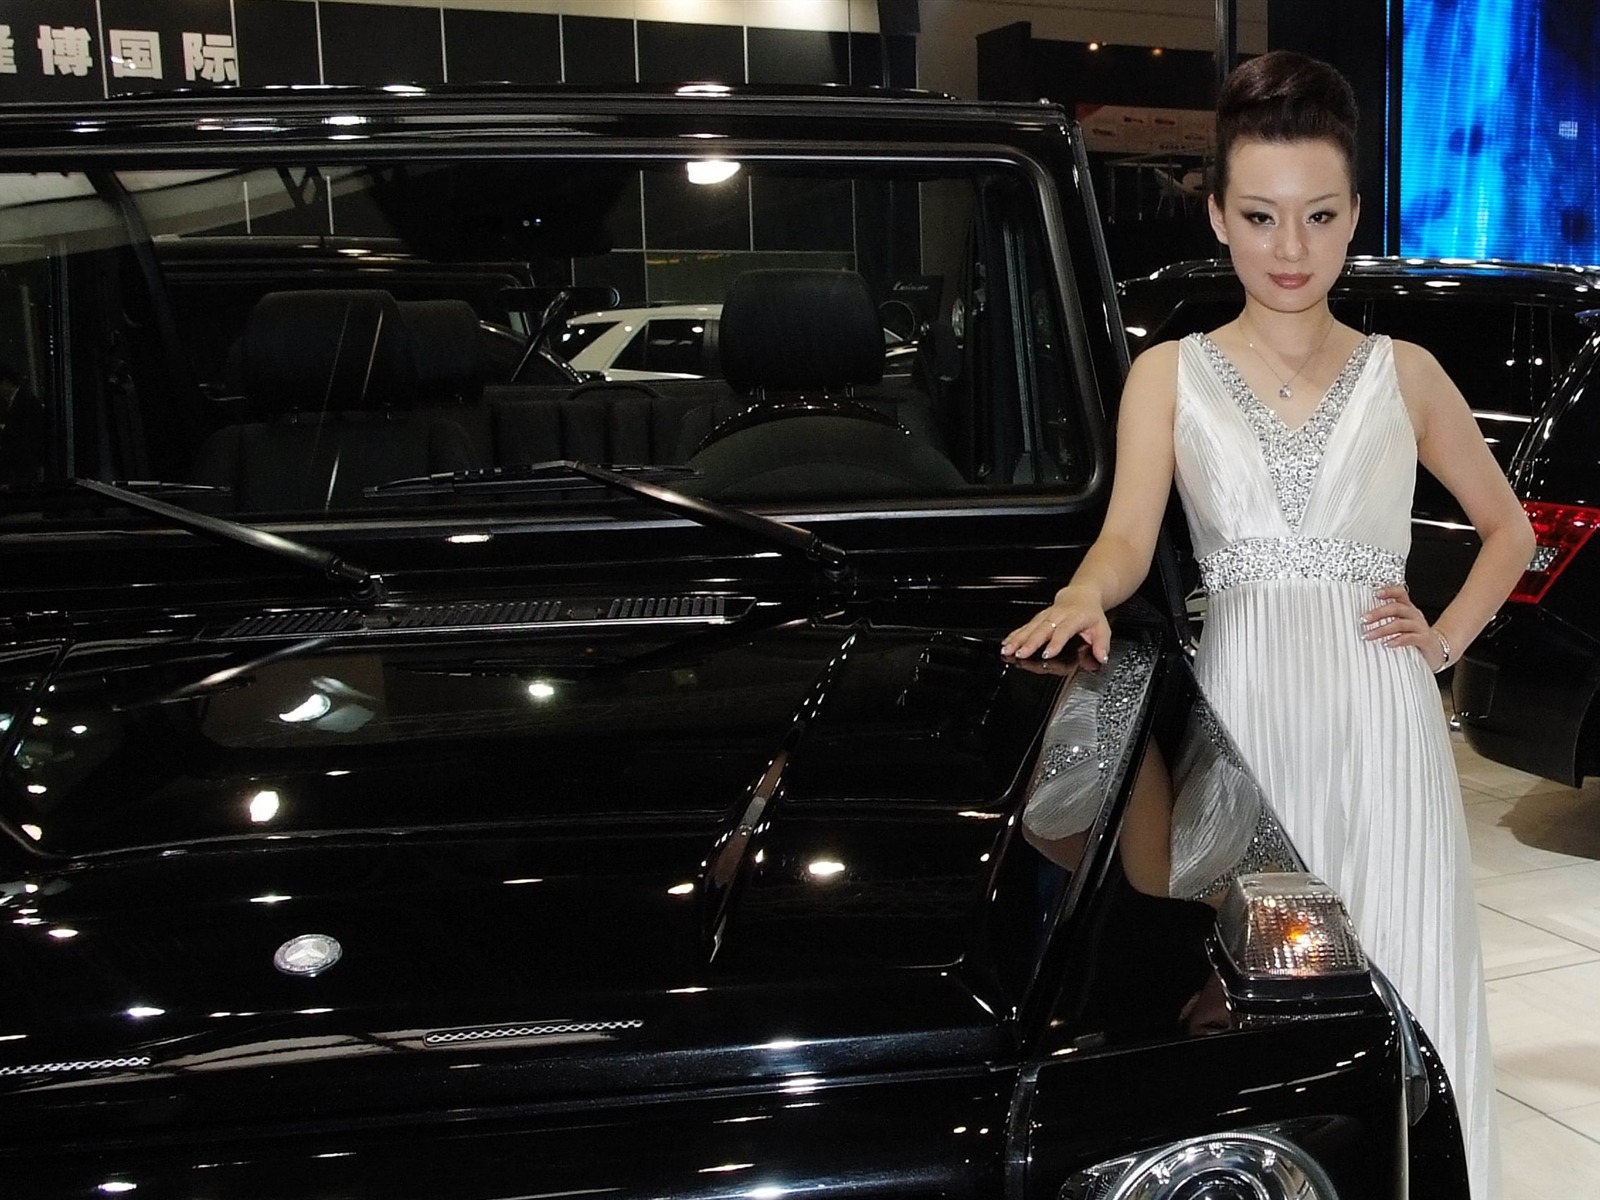 2010 Salón Internacional del Automóvil de Beijing Heung Che belleza (obras barras de refuerzo) #7 - 1600x1200